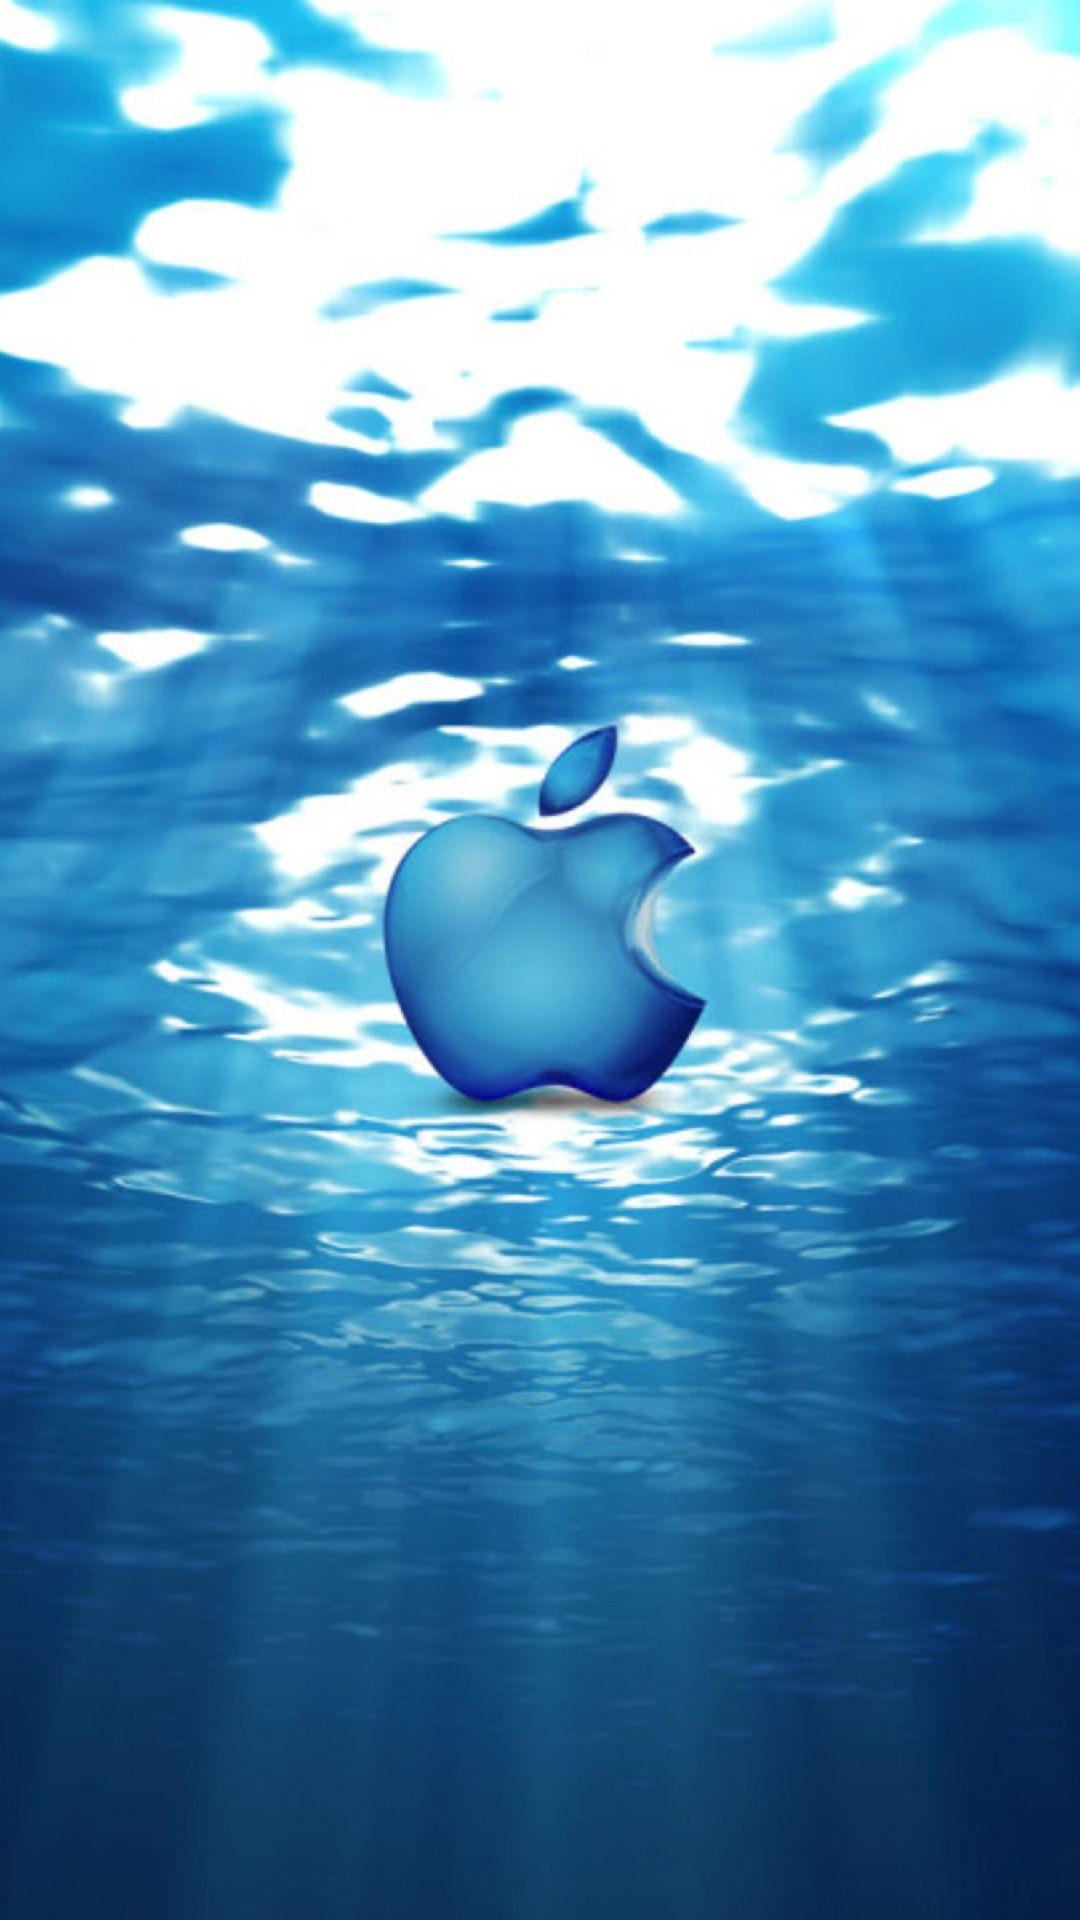 Underwater Iphone Wallpapers Top Free Underwater Iphone Backgrounds Wallpaperaccess